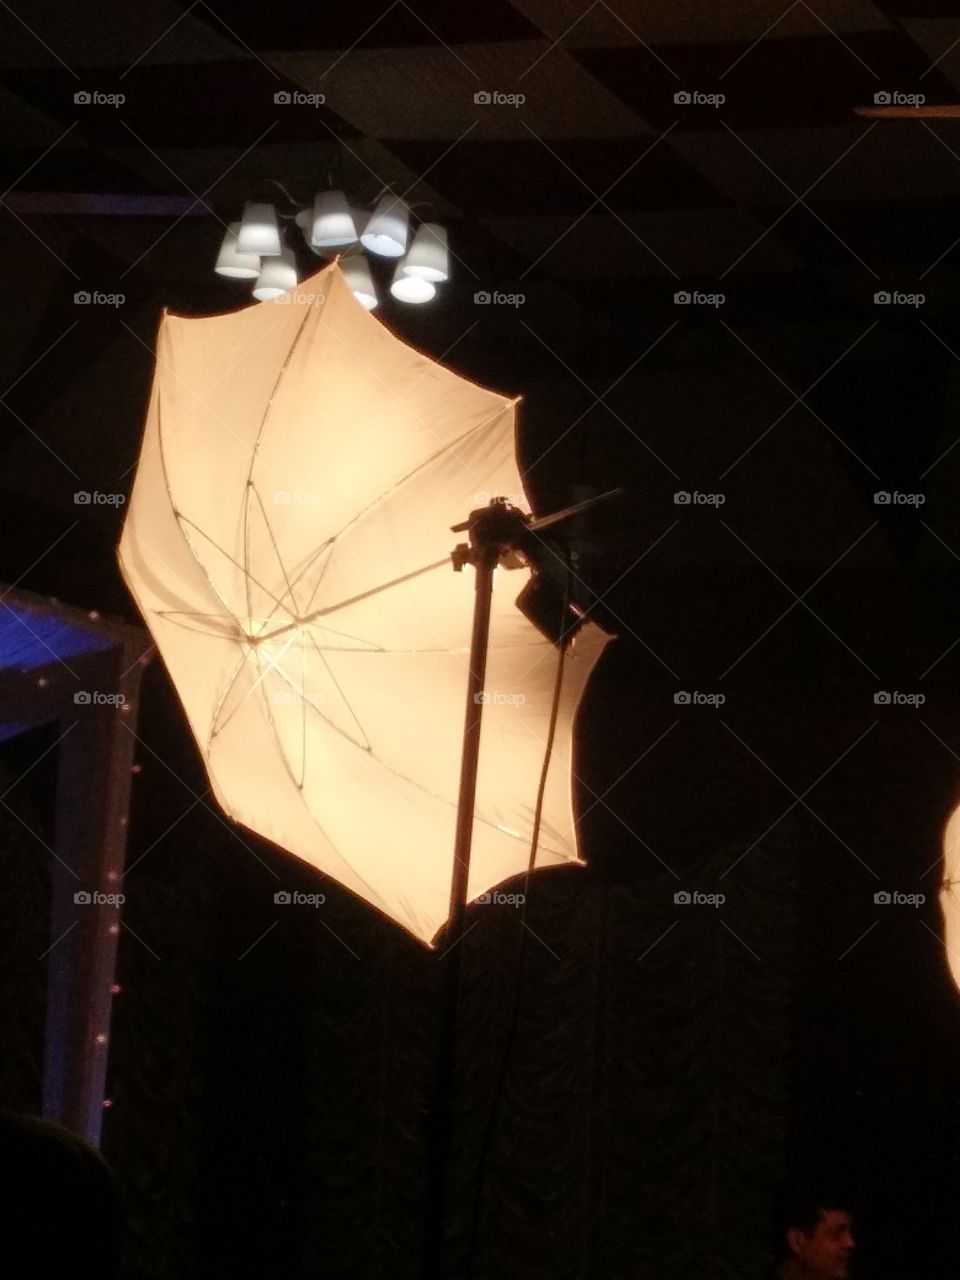 Umbrella stopping direct light